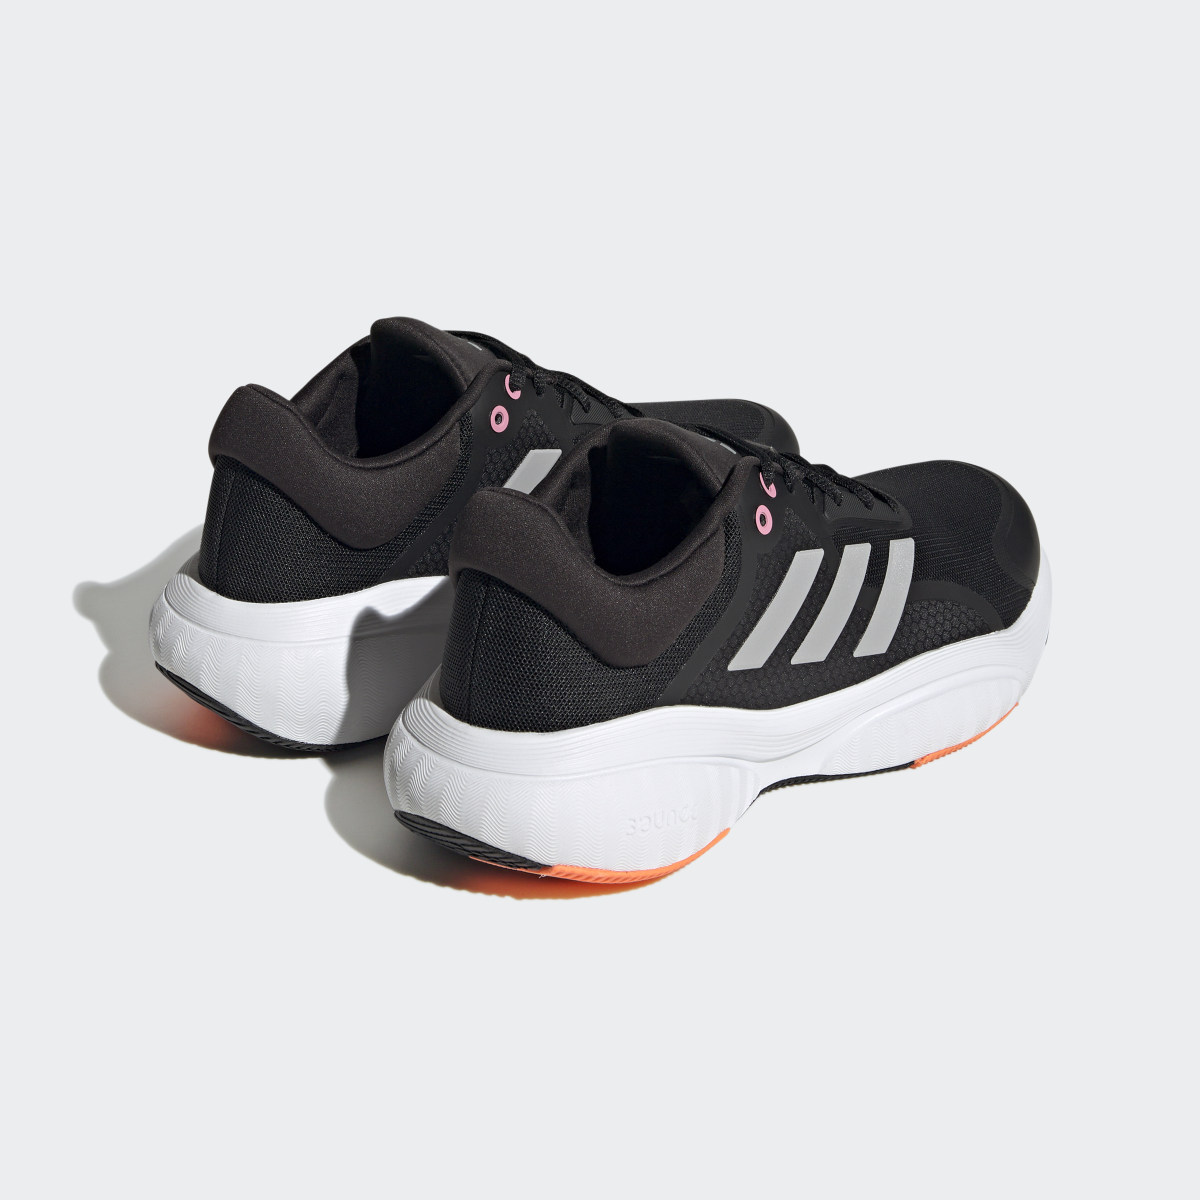 Adidas Response Shoes. 6